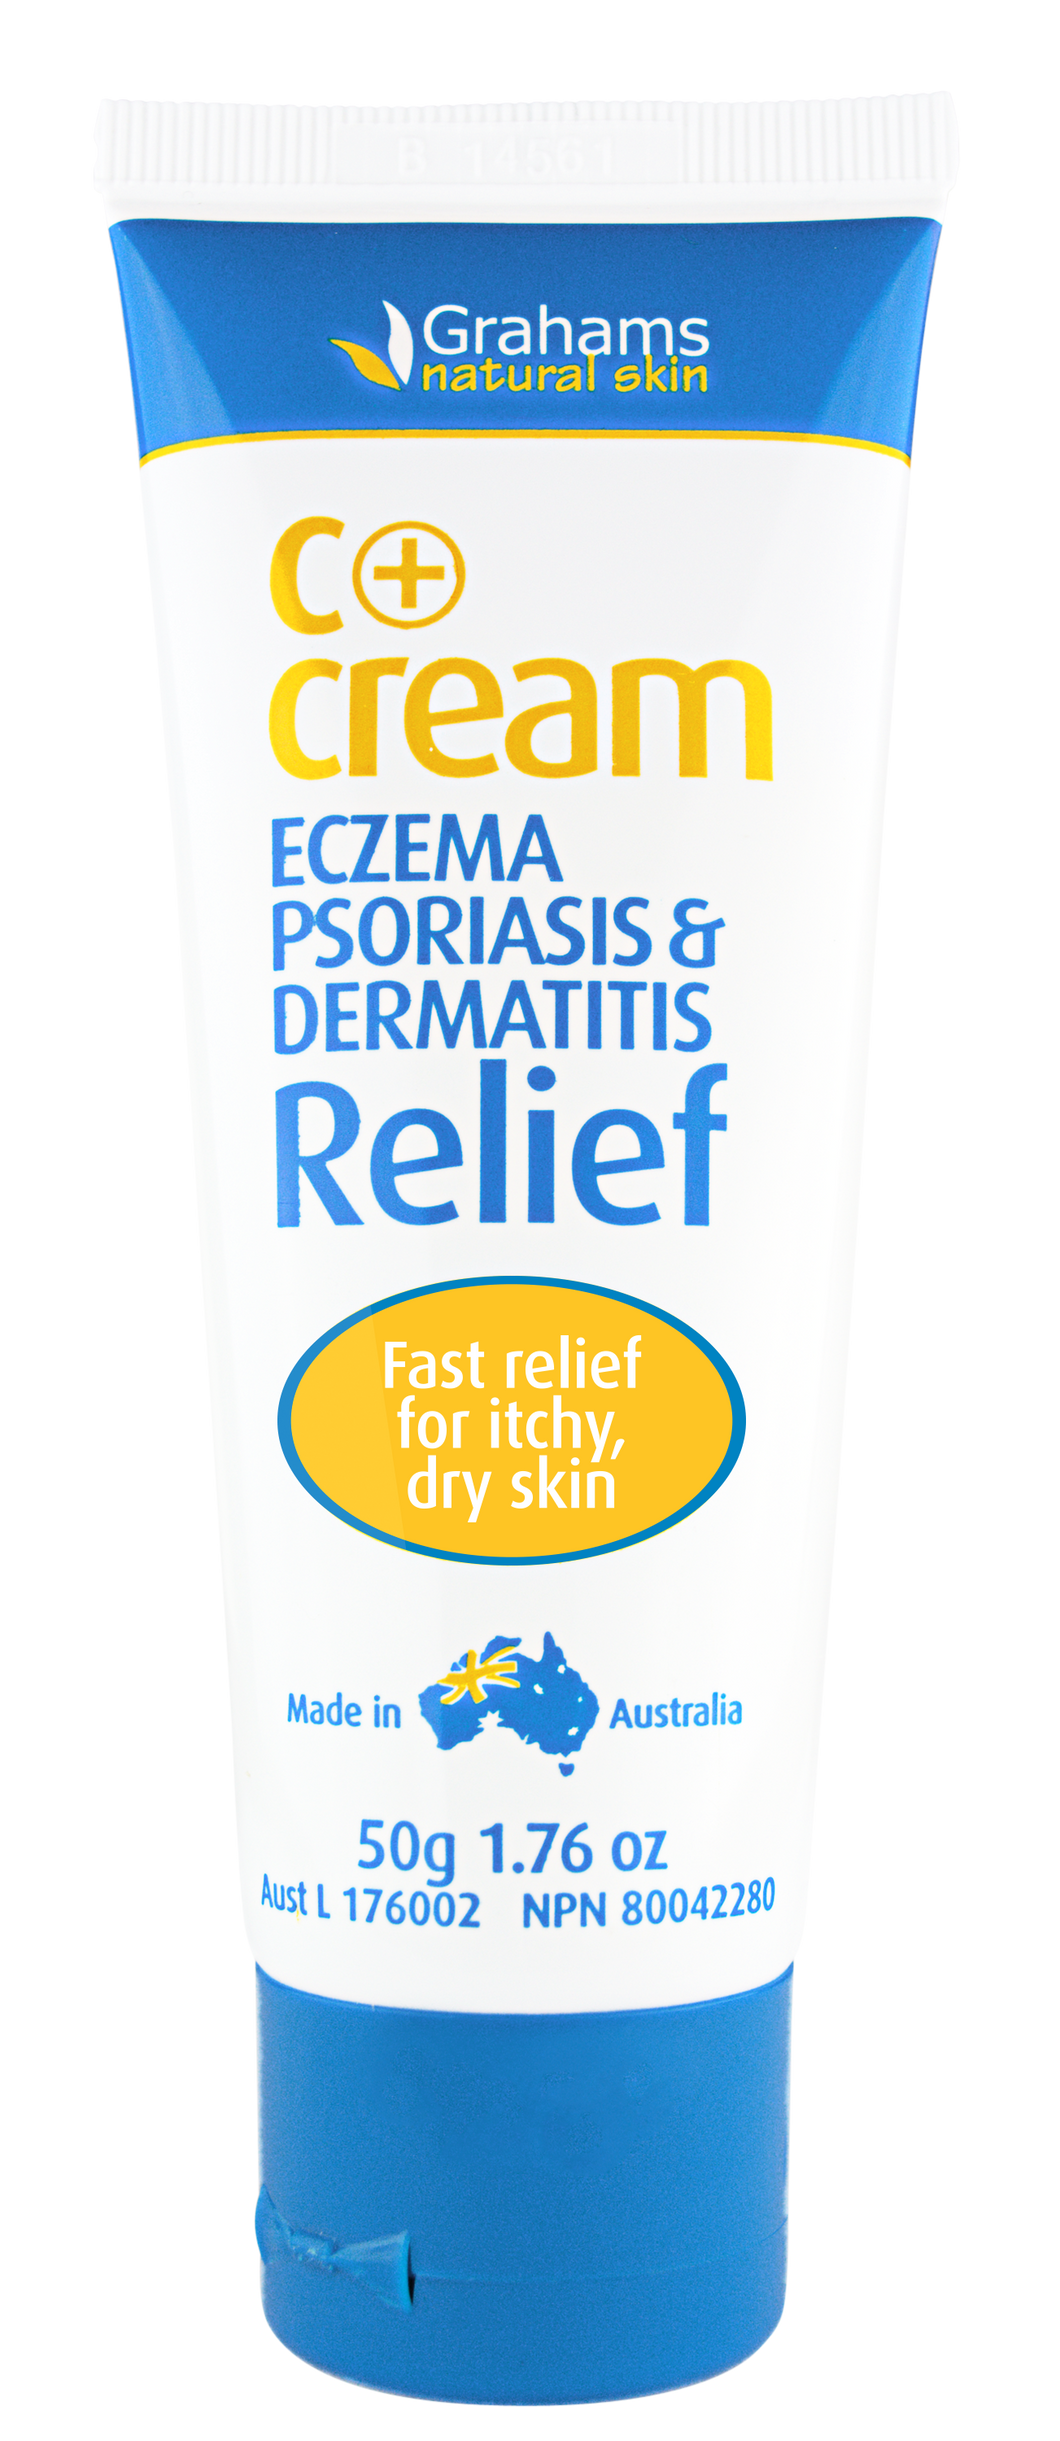 Grahams C+ Cream for Eczema & Dermatitis